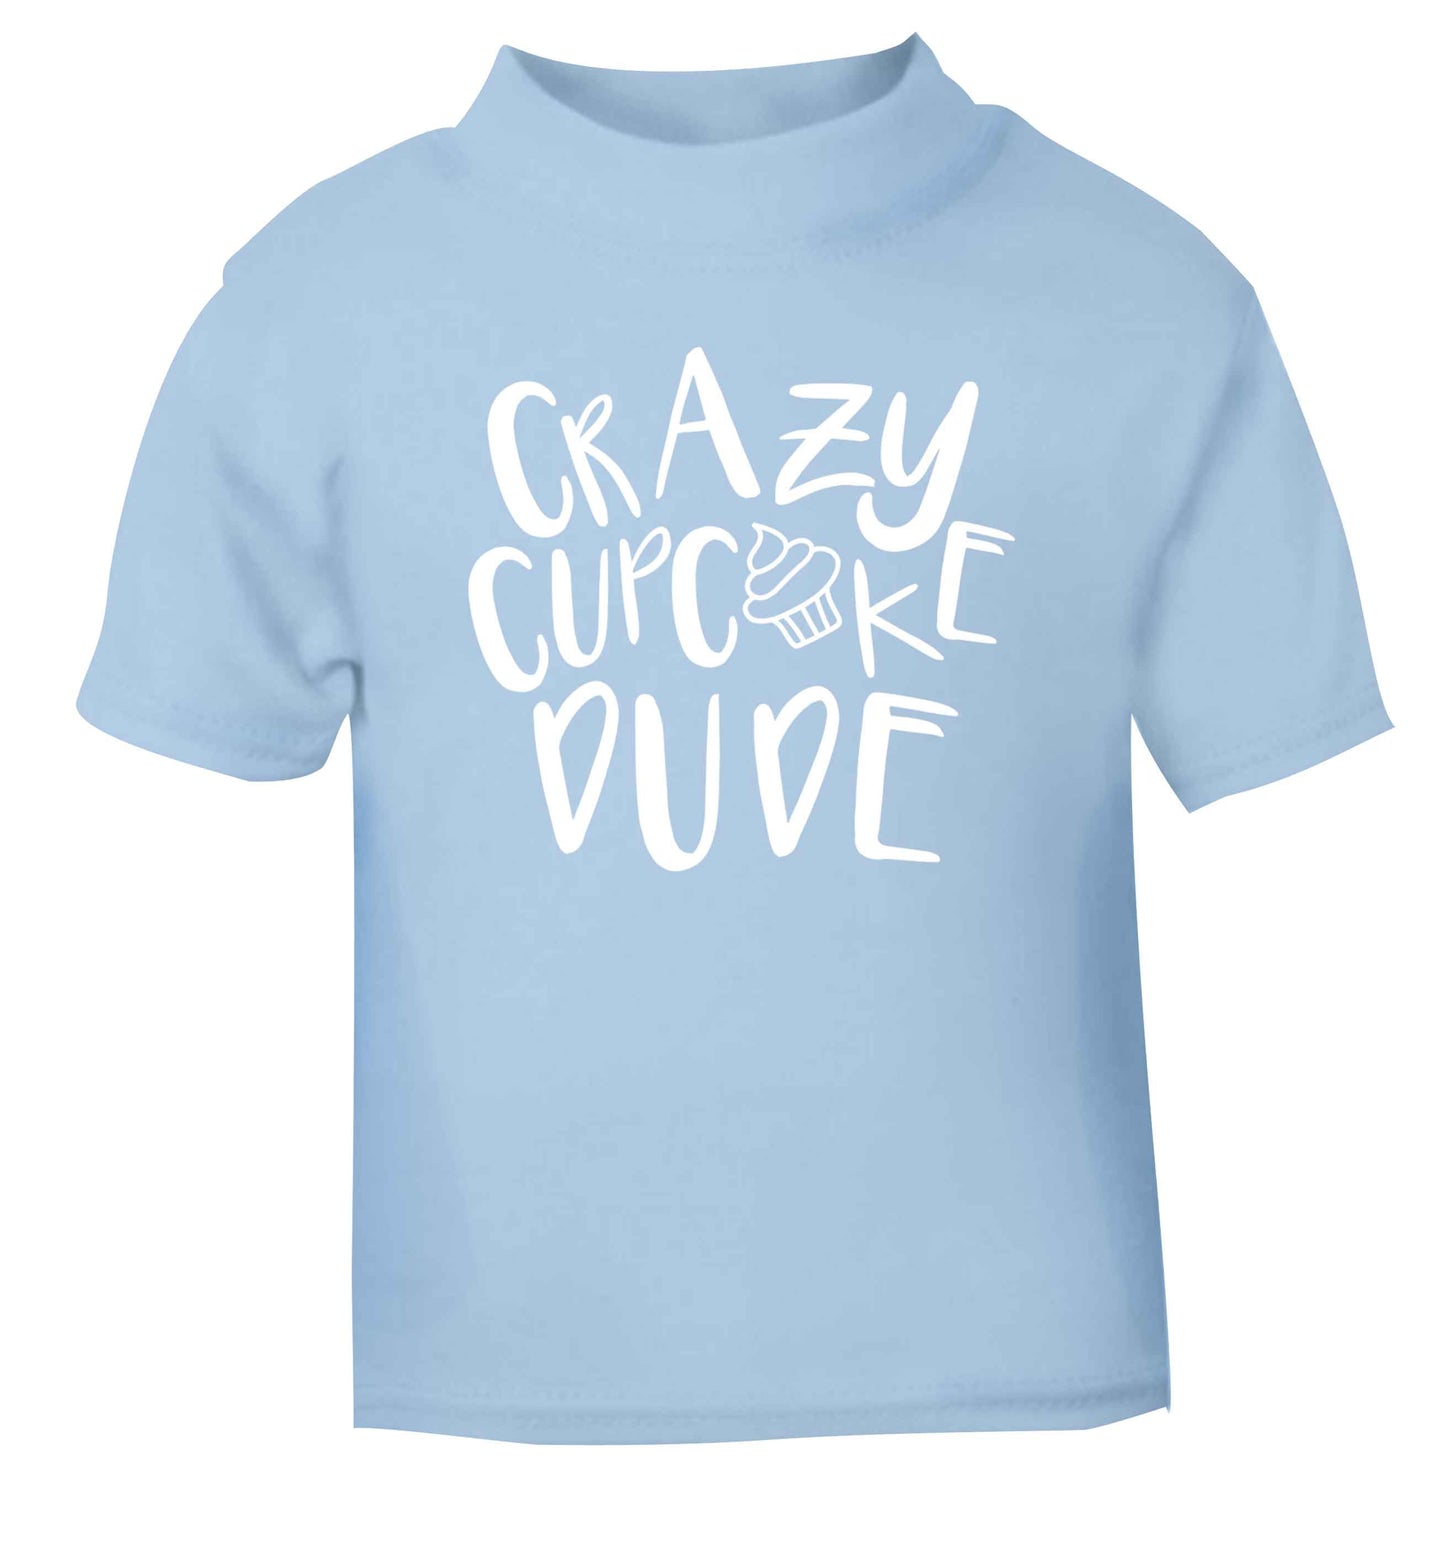 Crazy cupcake dude light blue Baby Toddler Tshirt 2 Years